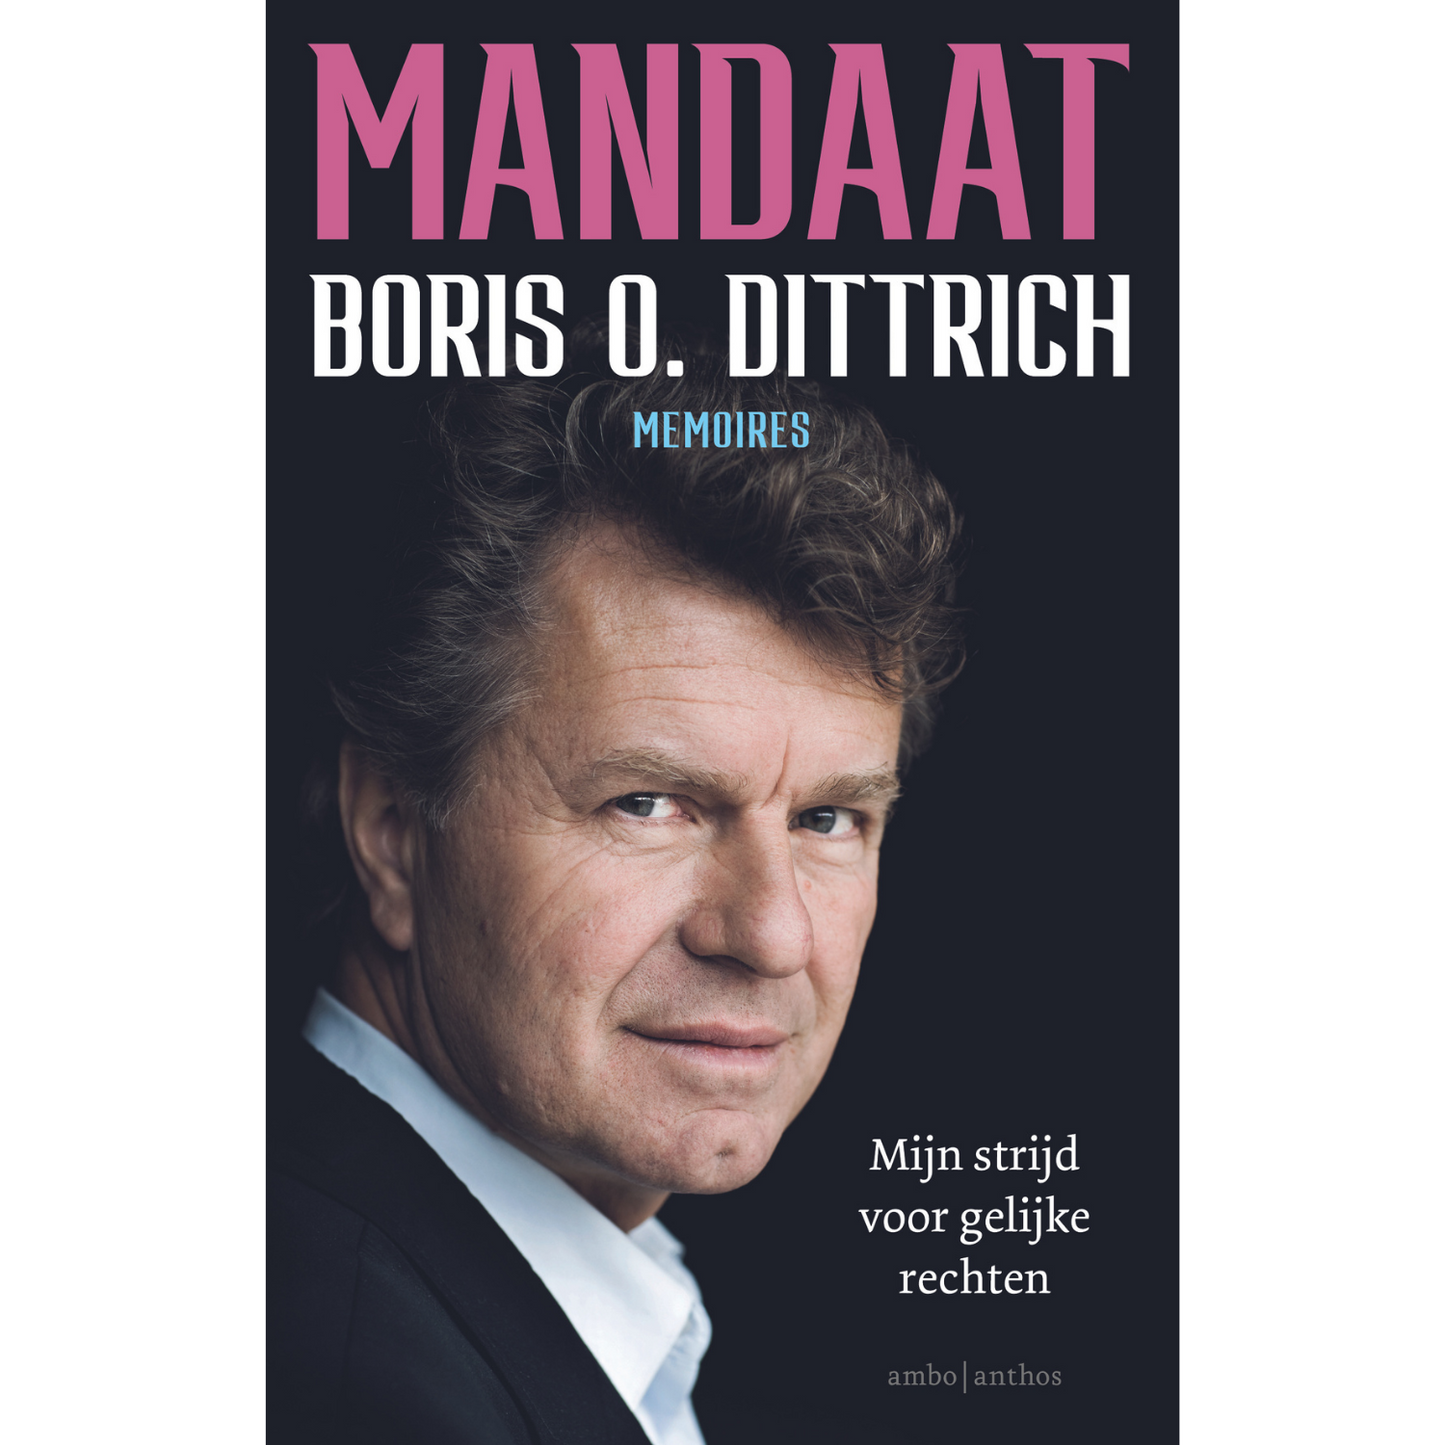 Mandate - Boris Dittrich